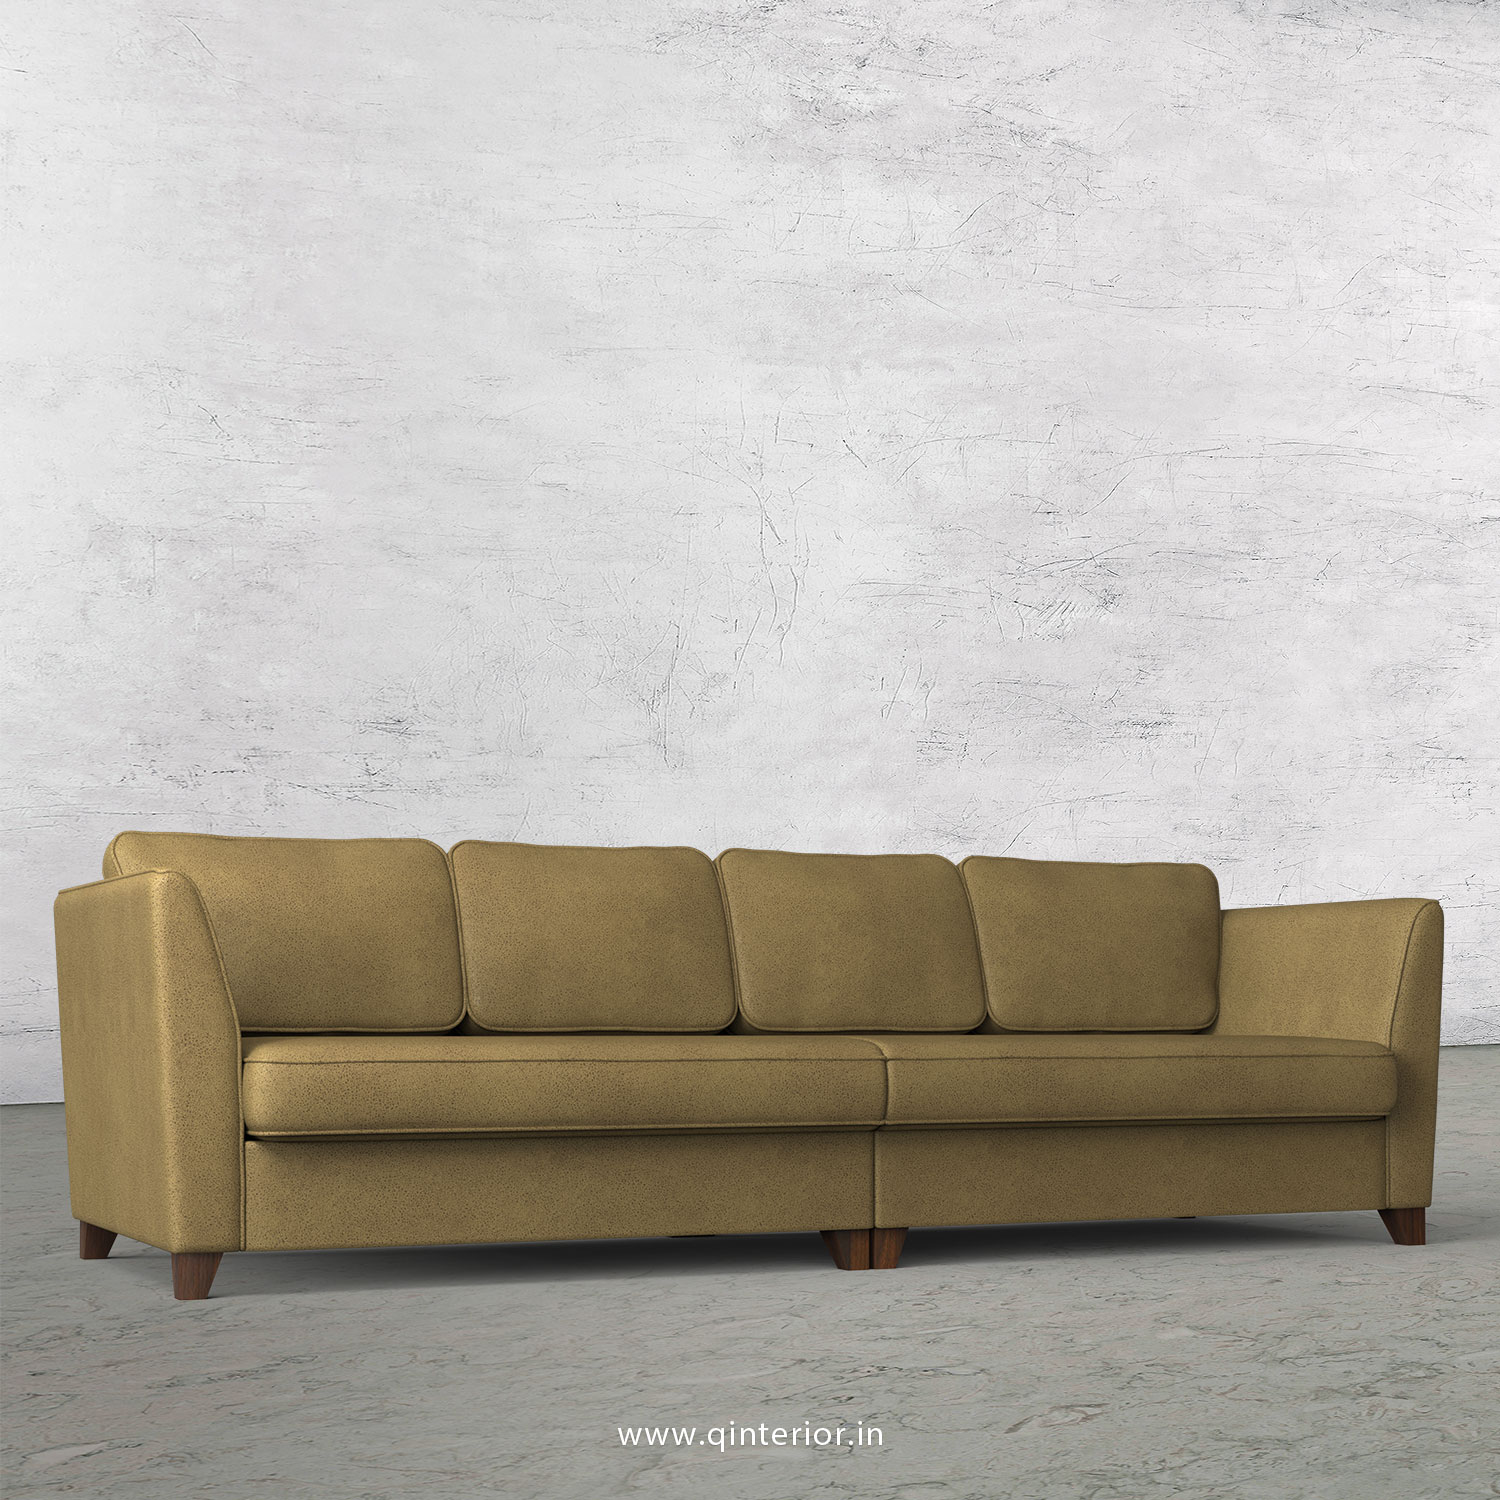 Kingstone 4 Seater Sofa in Fab Leather Fabric - SFA004 FL01